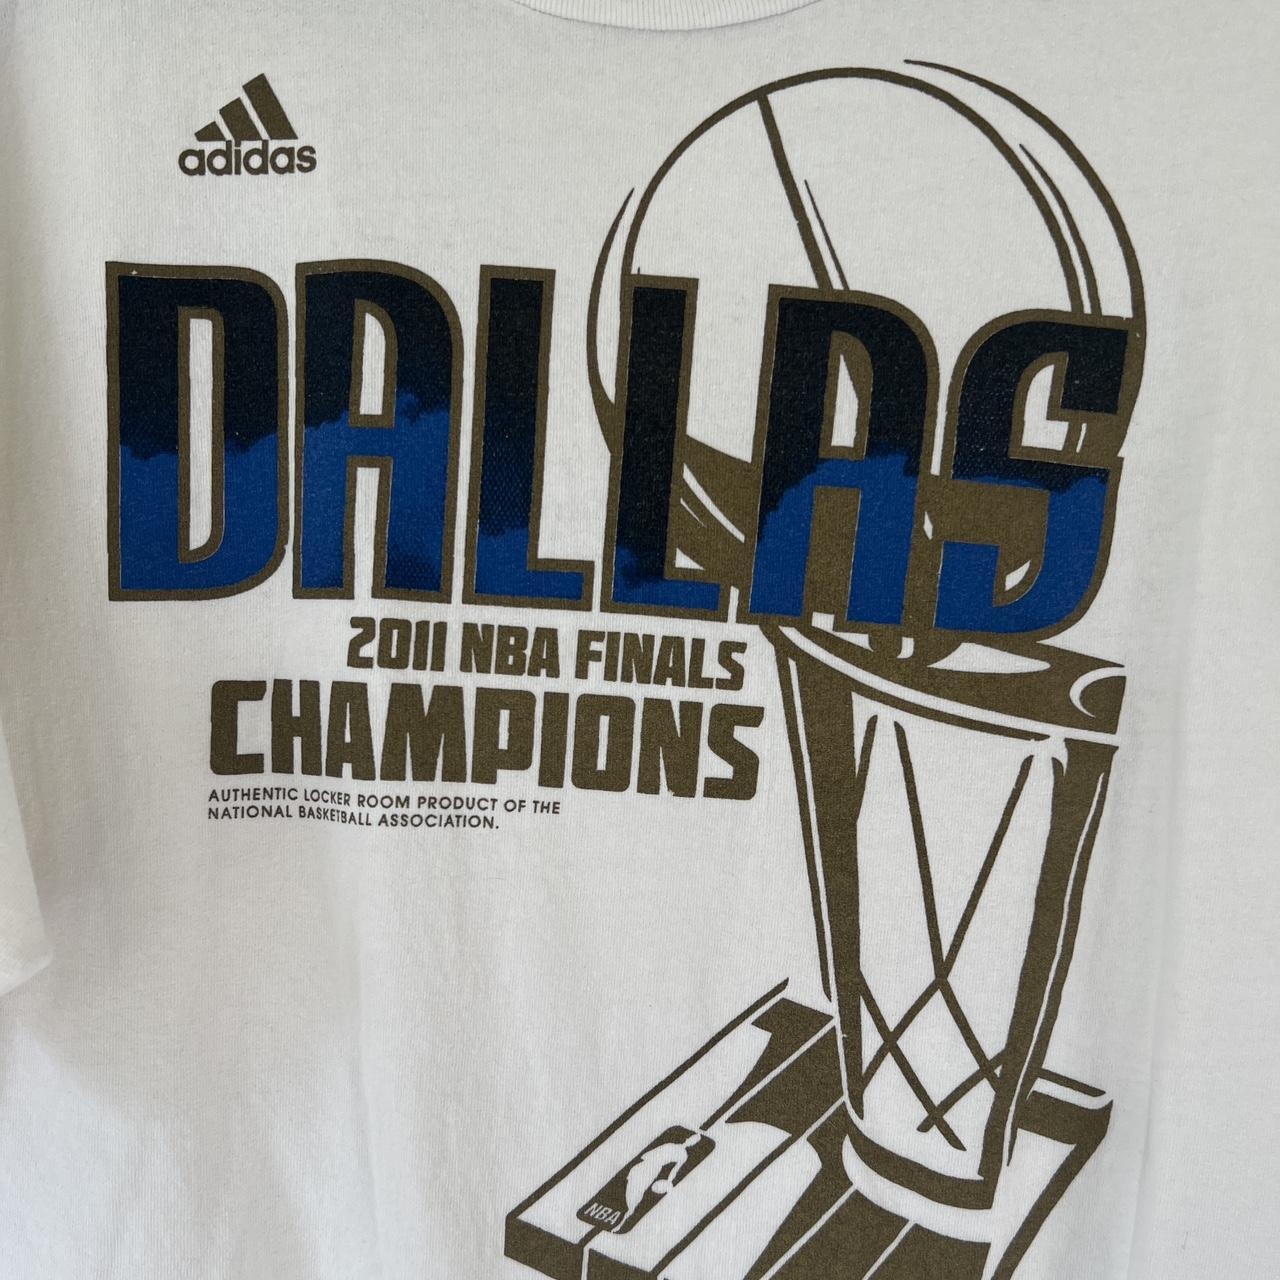 Dallas Mavericks 2011 NBA Finals Champions adidas - Depop